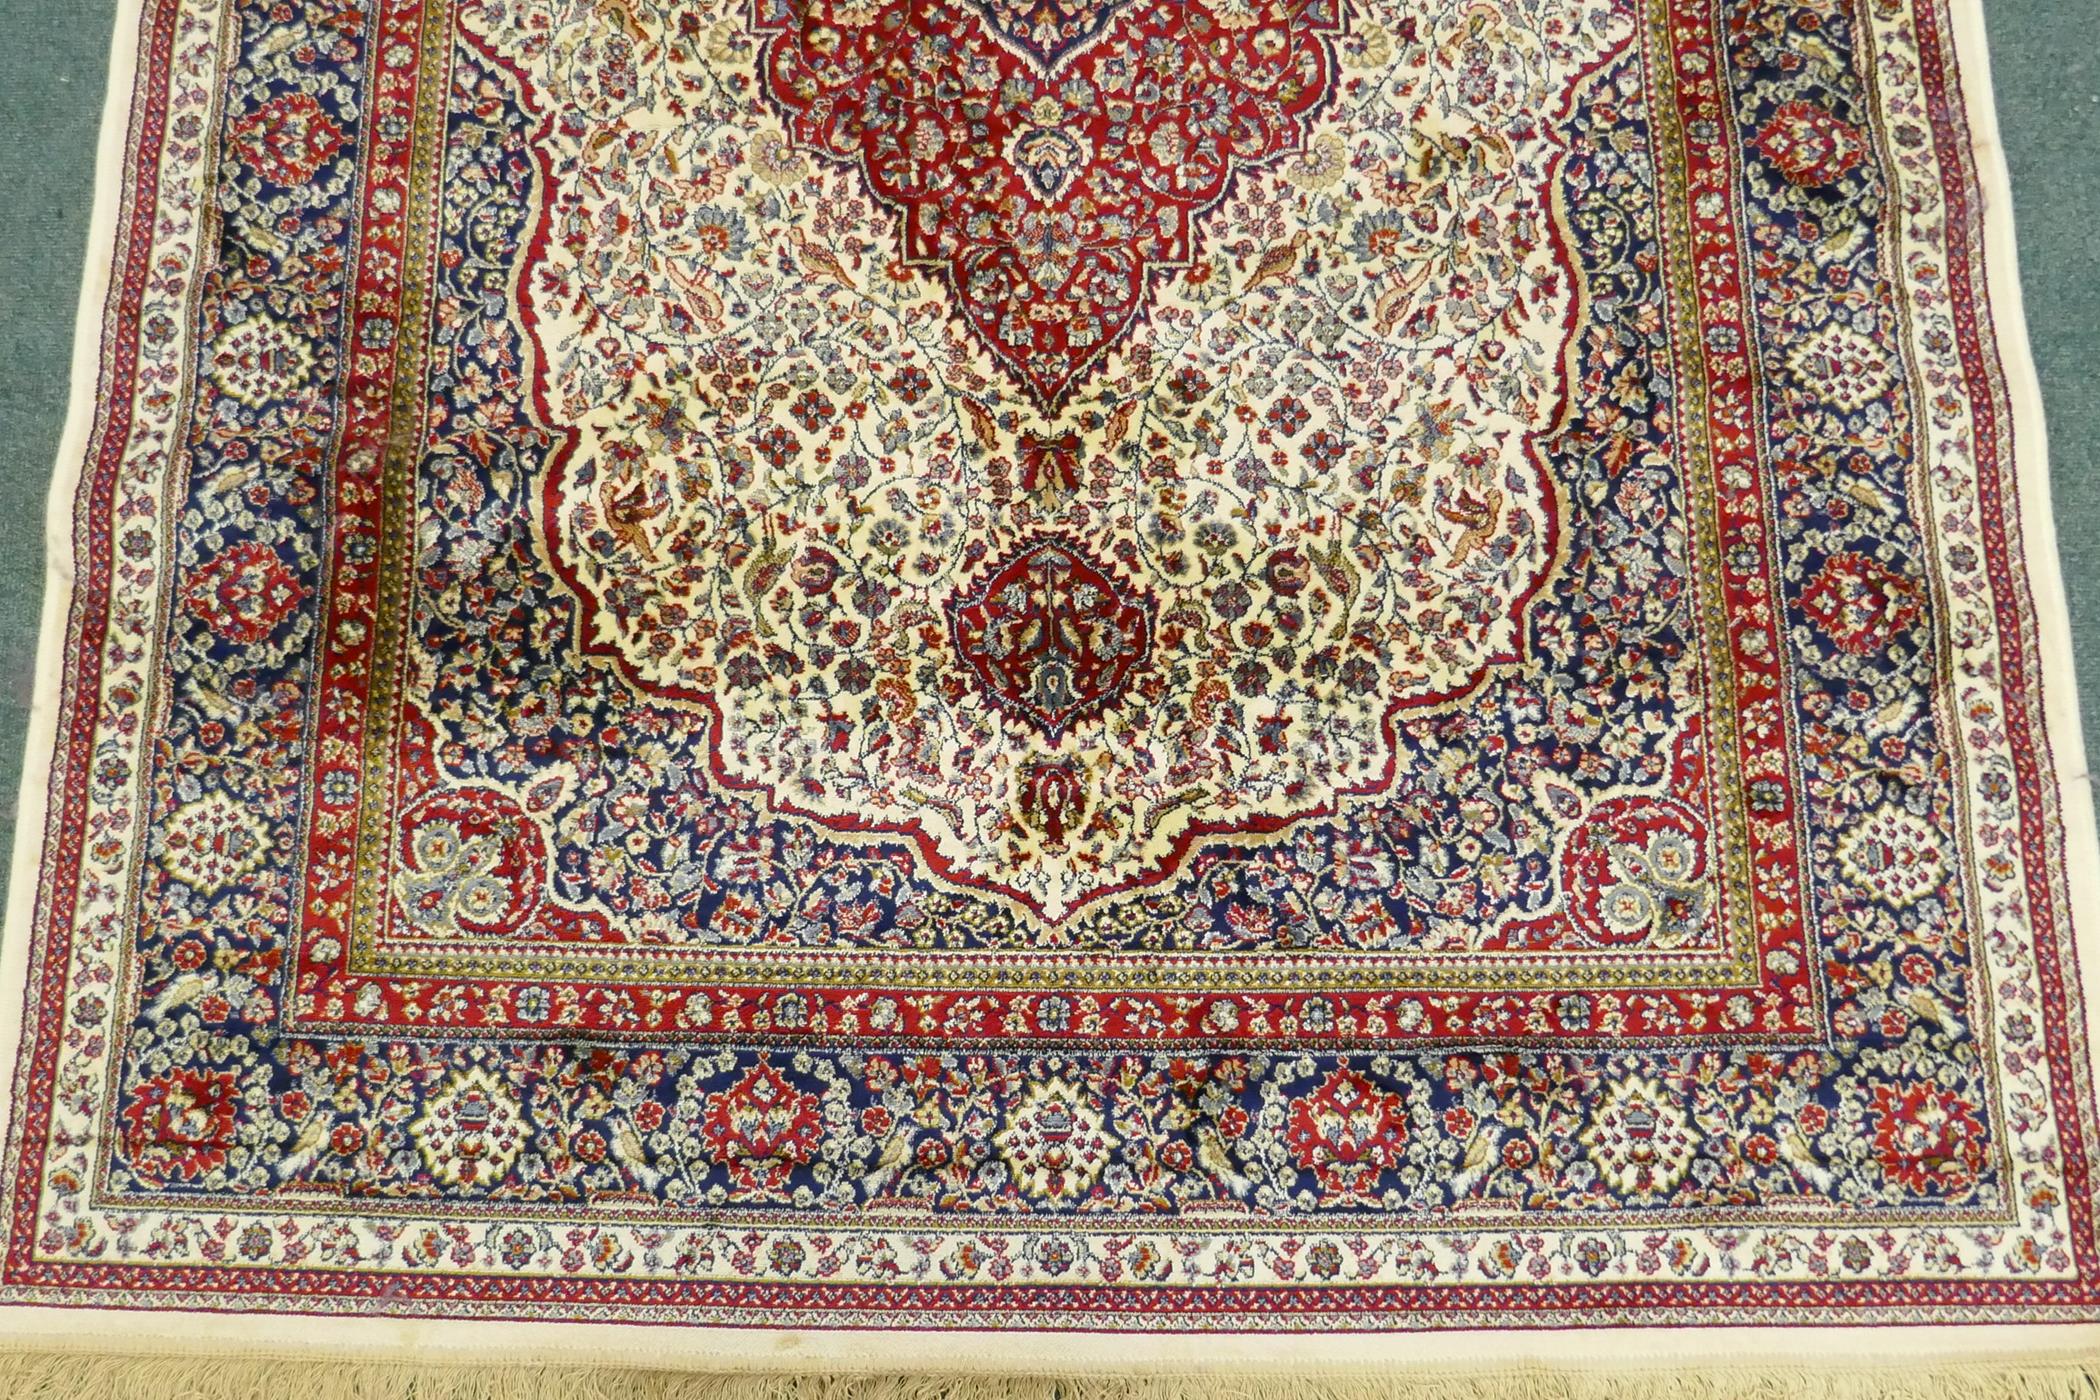 An ivory ground Kashmir carpet with central floral medallion design, 240 x 156cm - Image 5 of 5